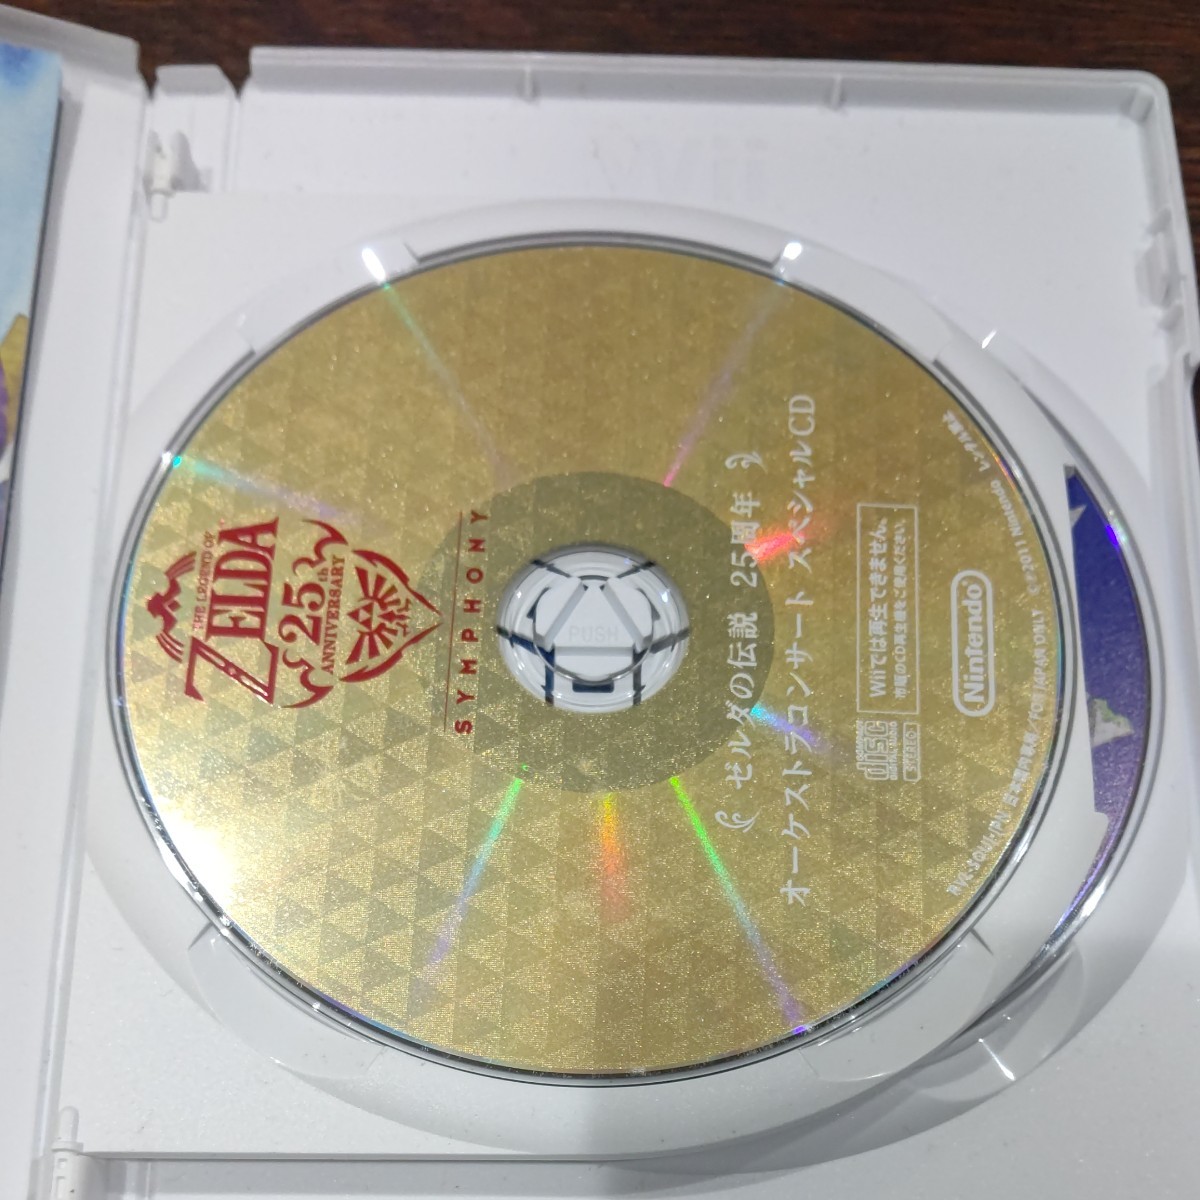 Wii ゼルダの伝説 スカイウォードソード スペシャルCD付き